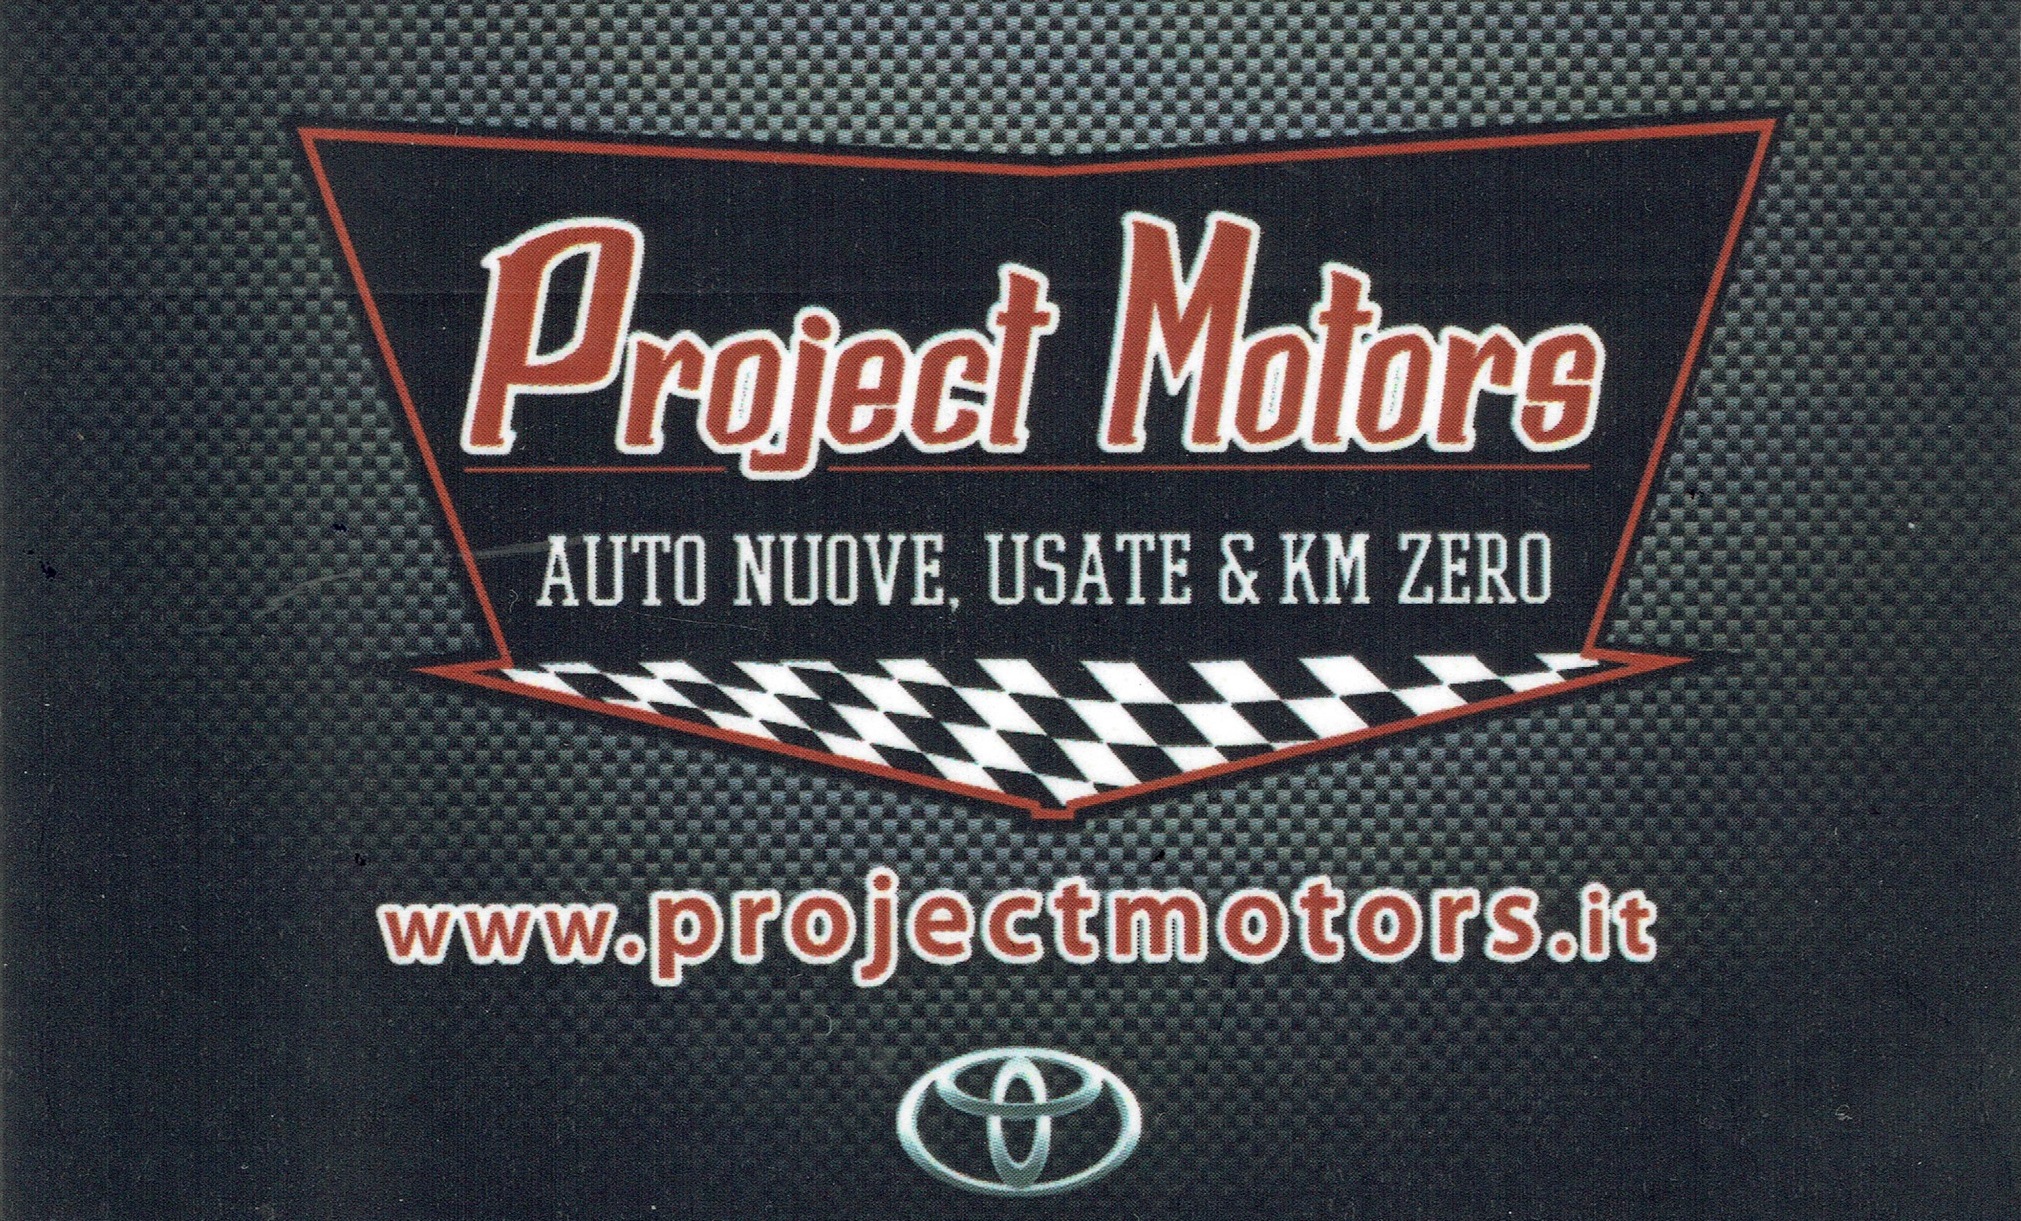 Projectmotors.it